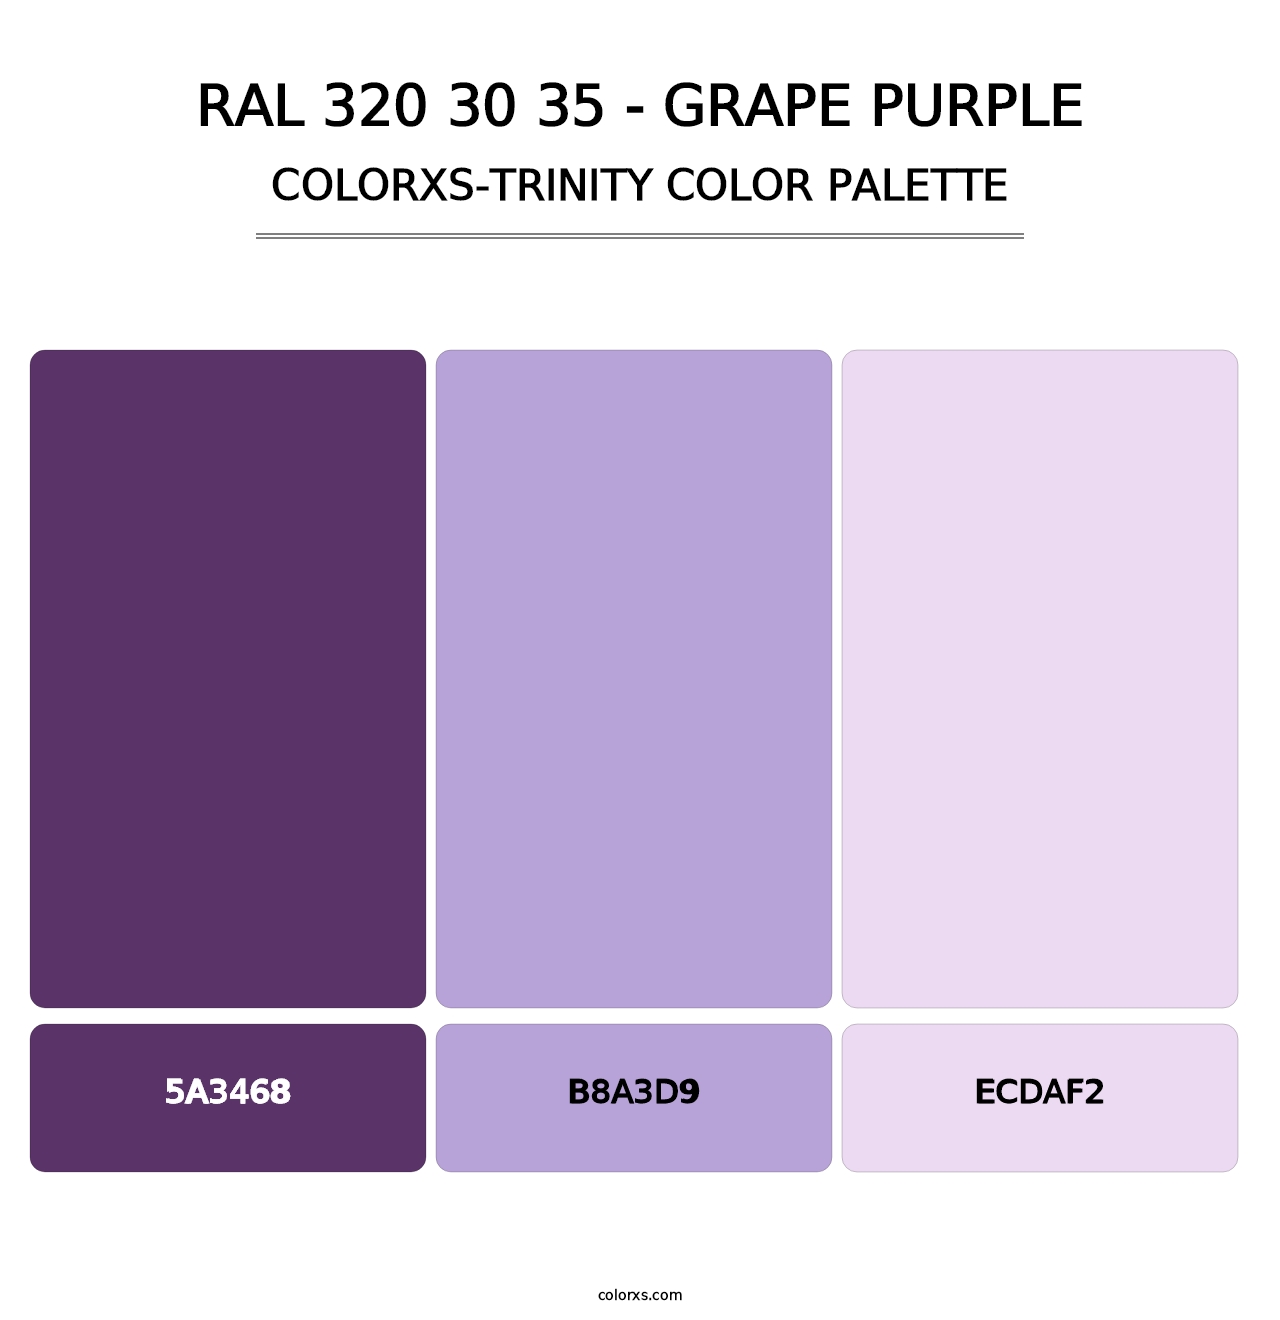 RAL 320 30 35 - Grape Purple - Colorxs Trinity Palette